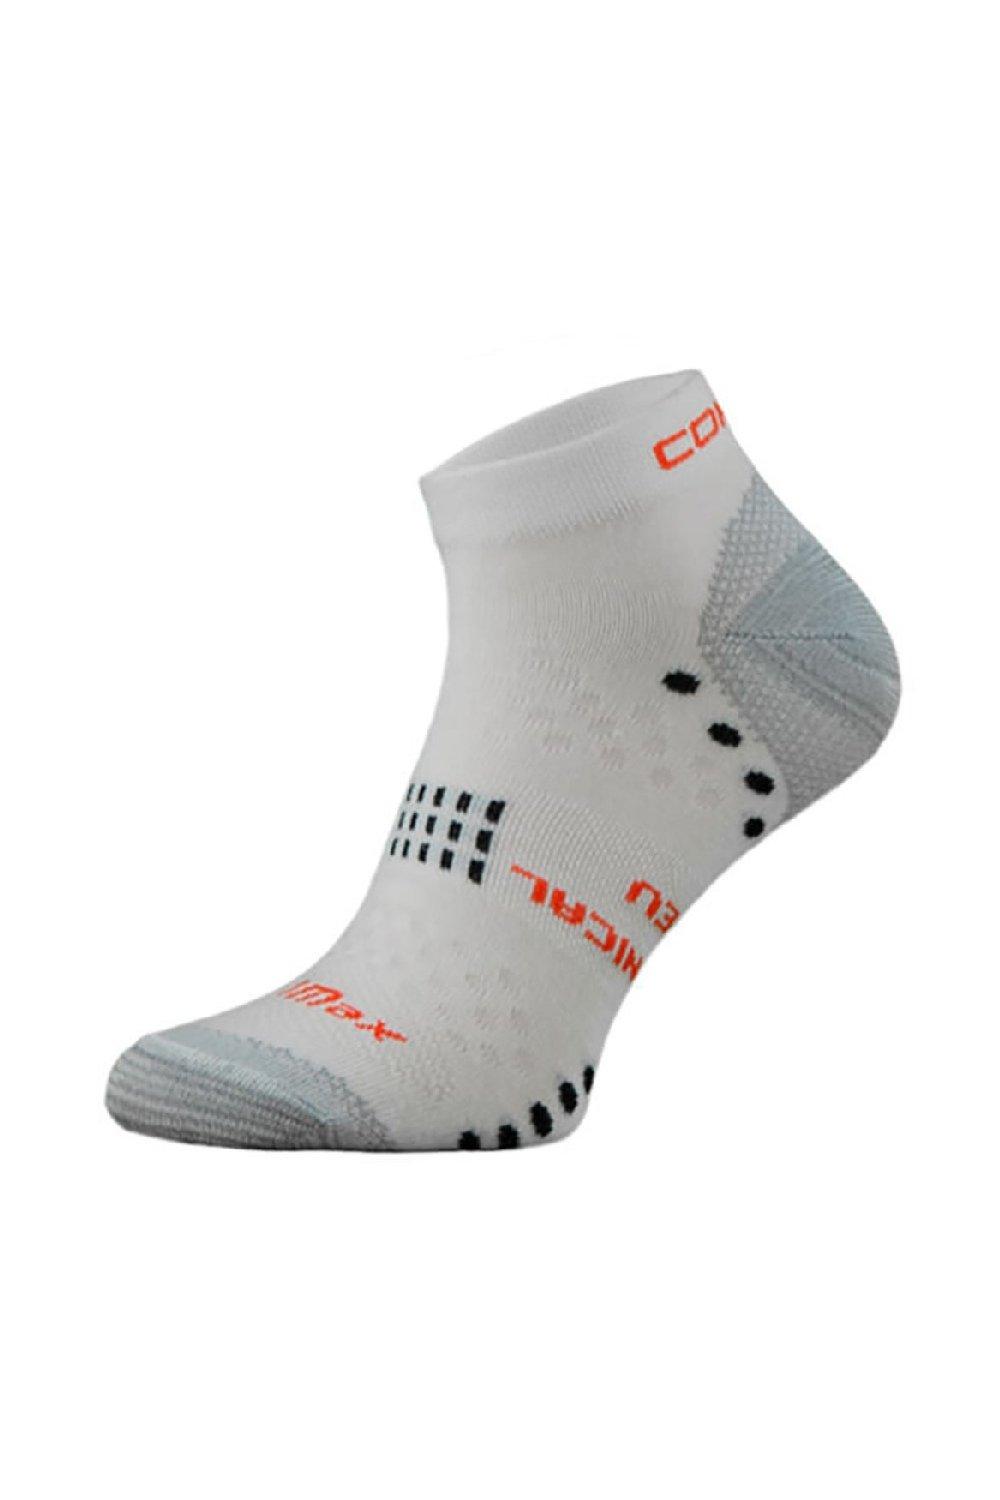 Underwear & Socks | Coolmax Running Socks with Arch Grip Support | COMODO